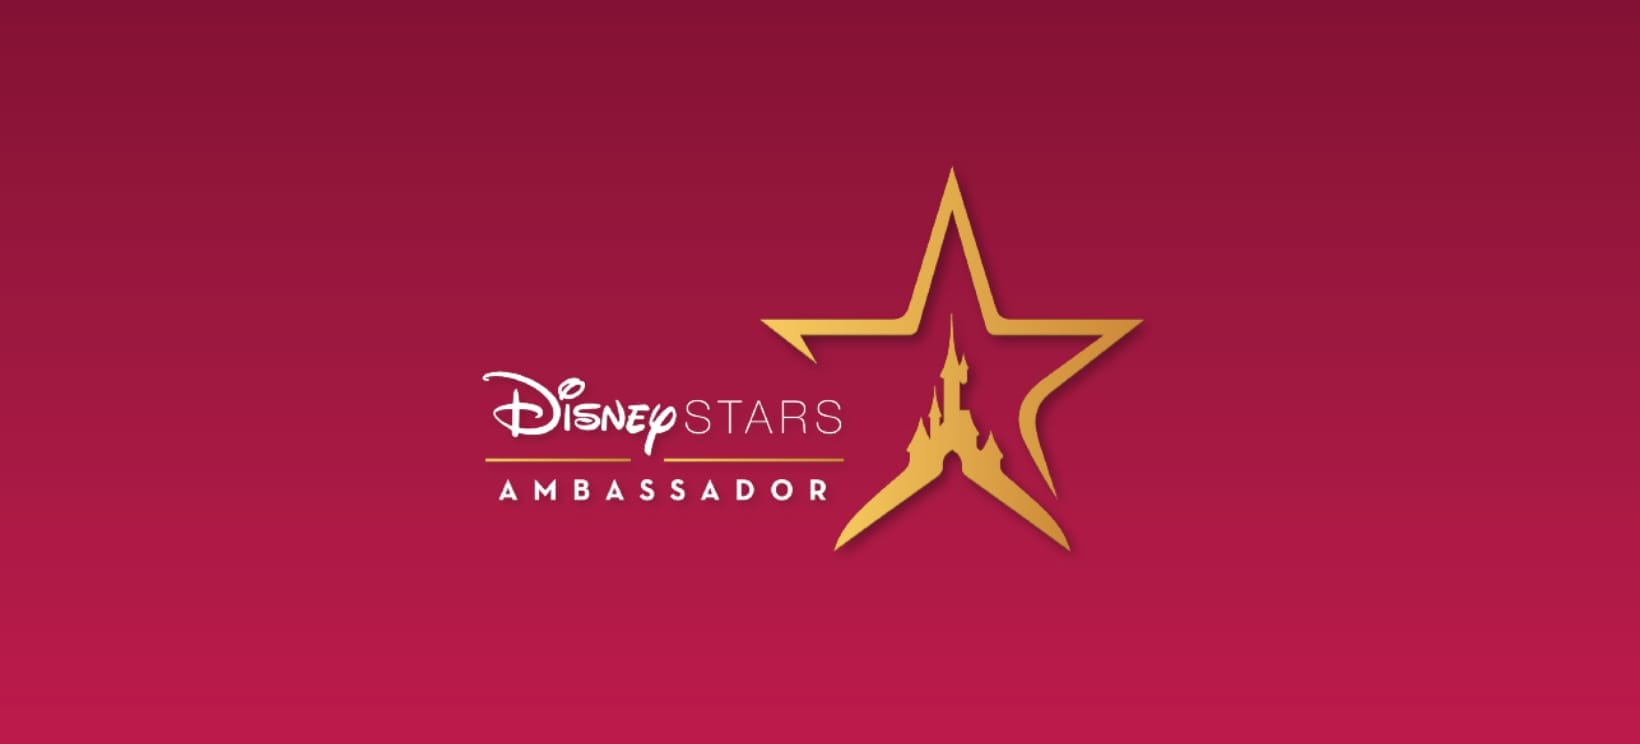 Visual-Disney-Stars-Ambassador